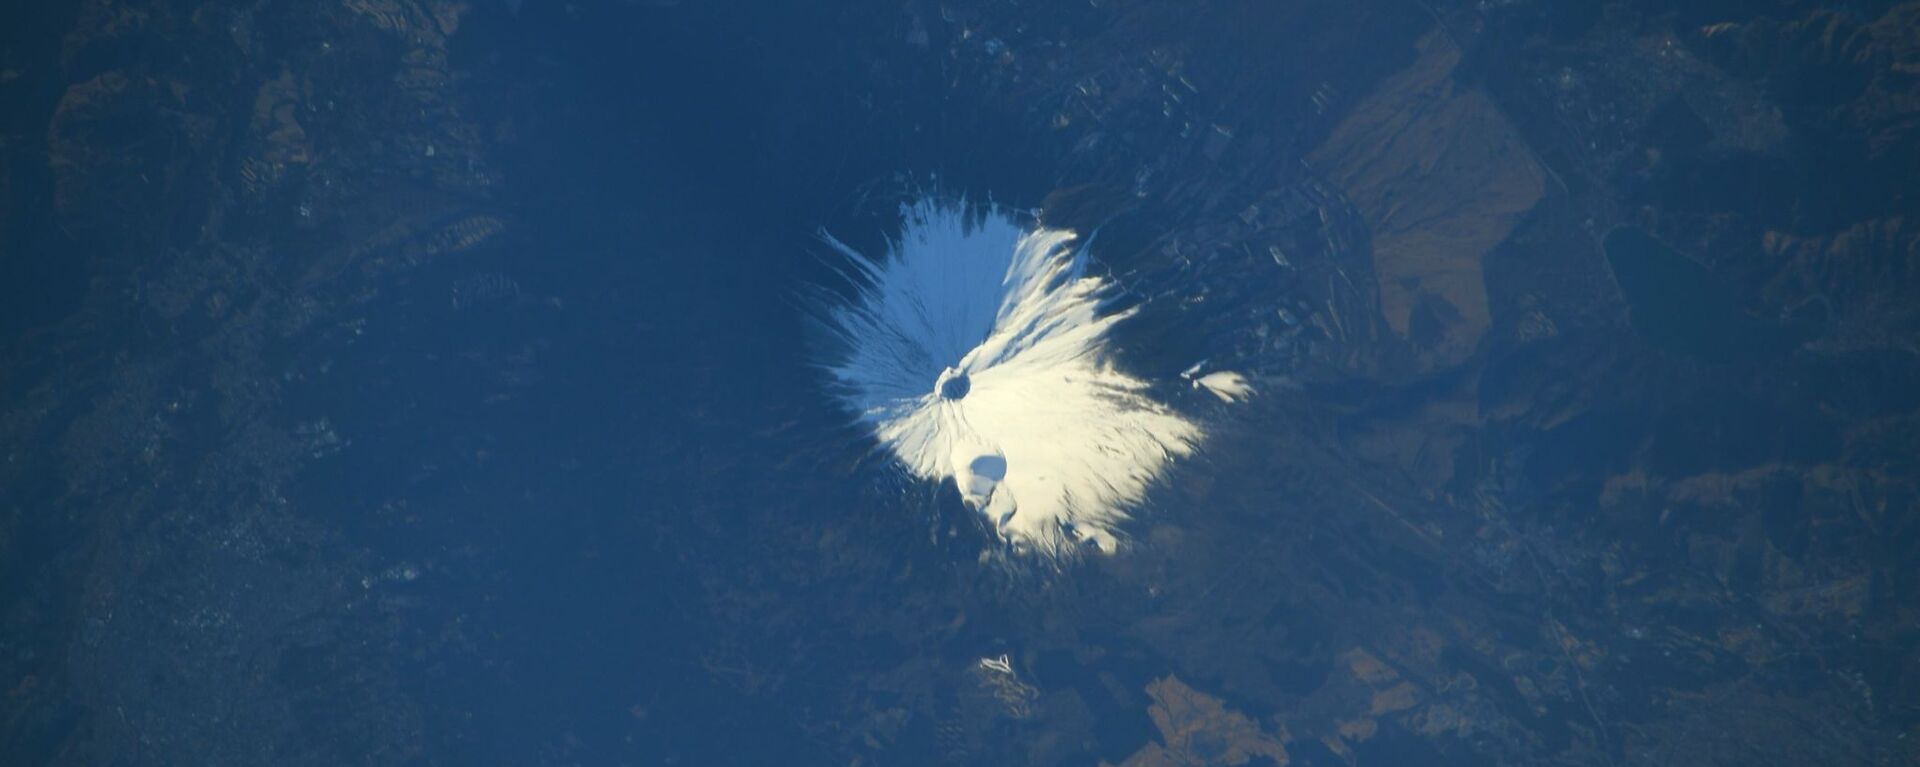 Заснеженная гора Фудзияма, снятая японским астронавтом Соити Ногути с МКС - Sputnik Lietuva, 1920, 22.02.2021